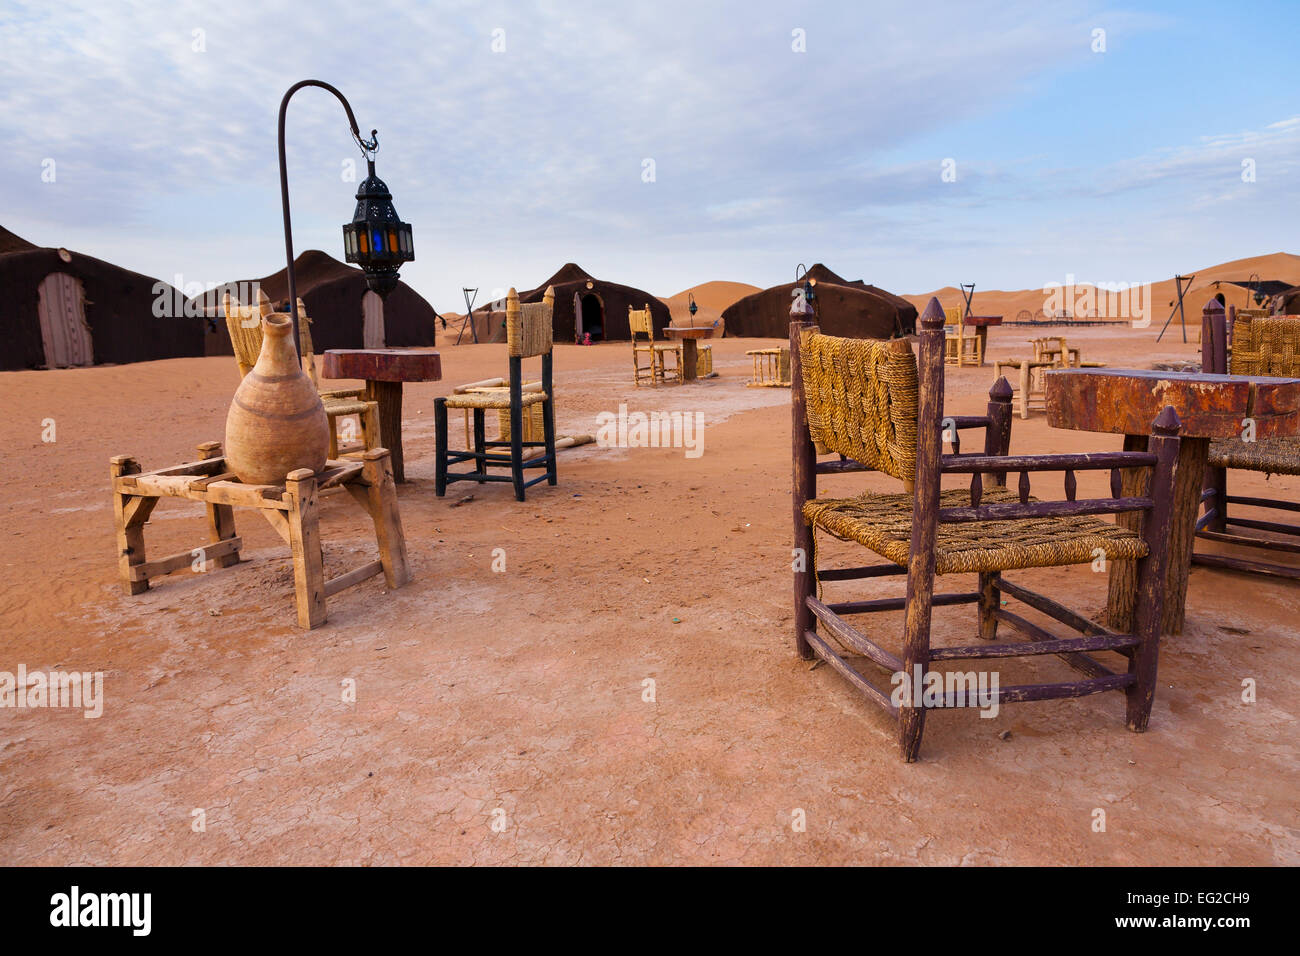 Empty camp in Erg Chigaga, Moroccan Sahara desert Stock Photo